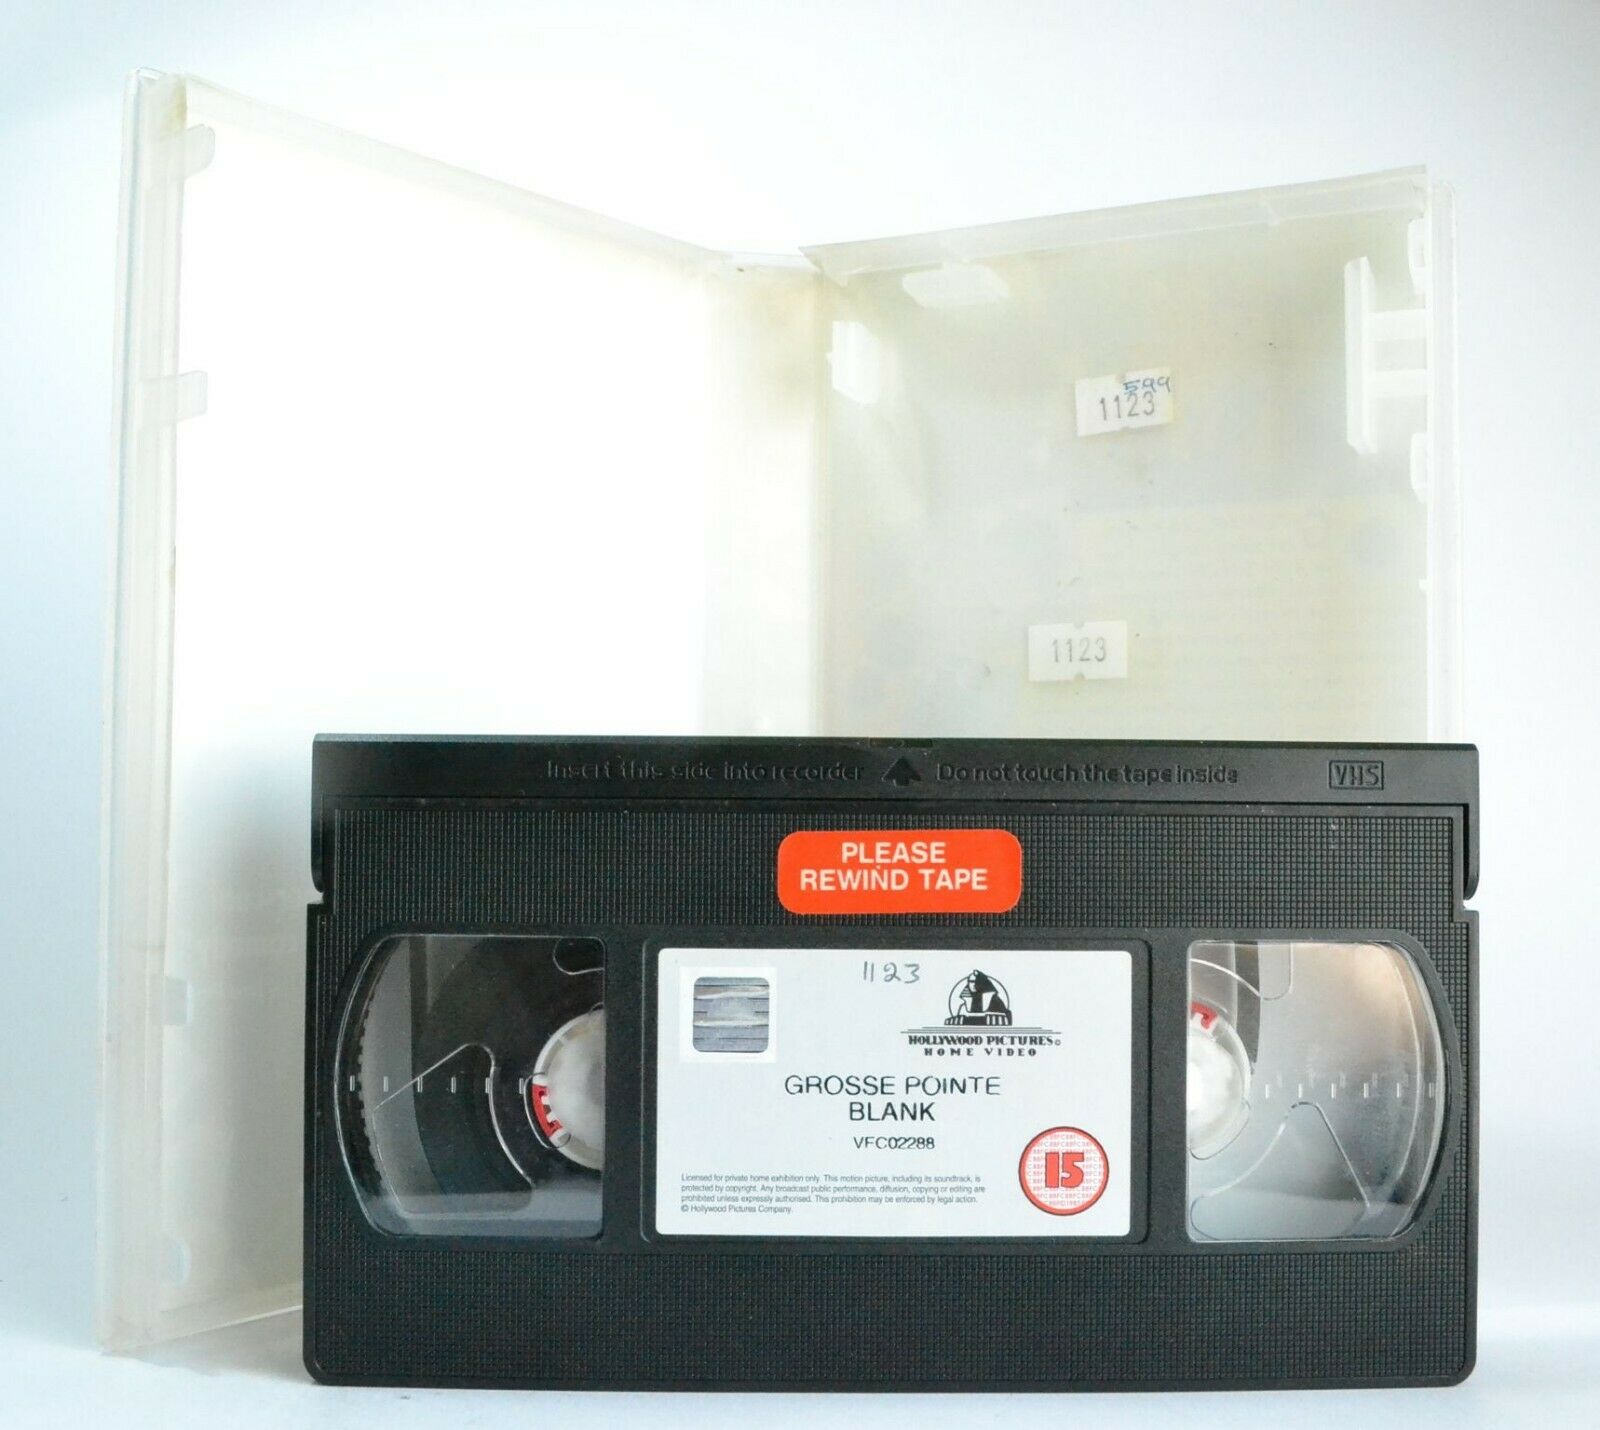 Grosse Pointe Blank: John Cusack; Hitman School Reunion (1997) - Large Box - VHS-